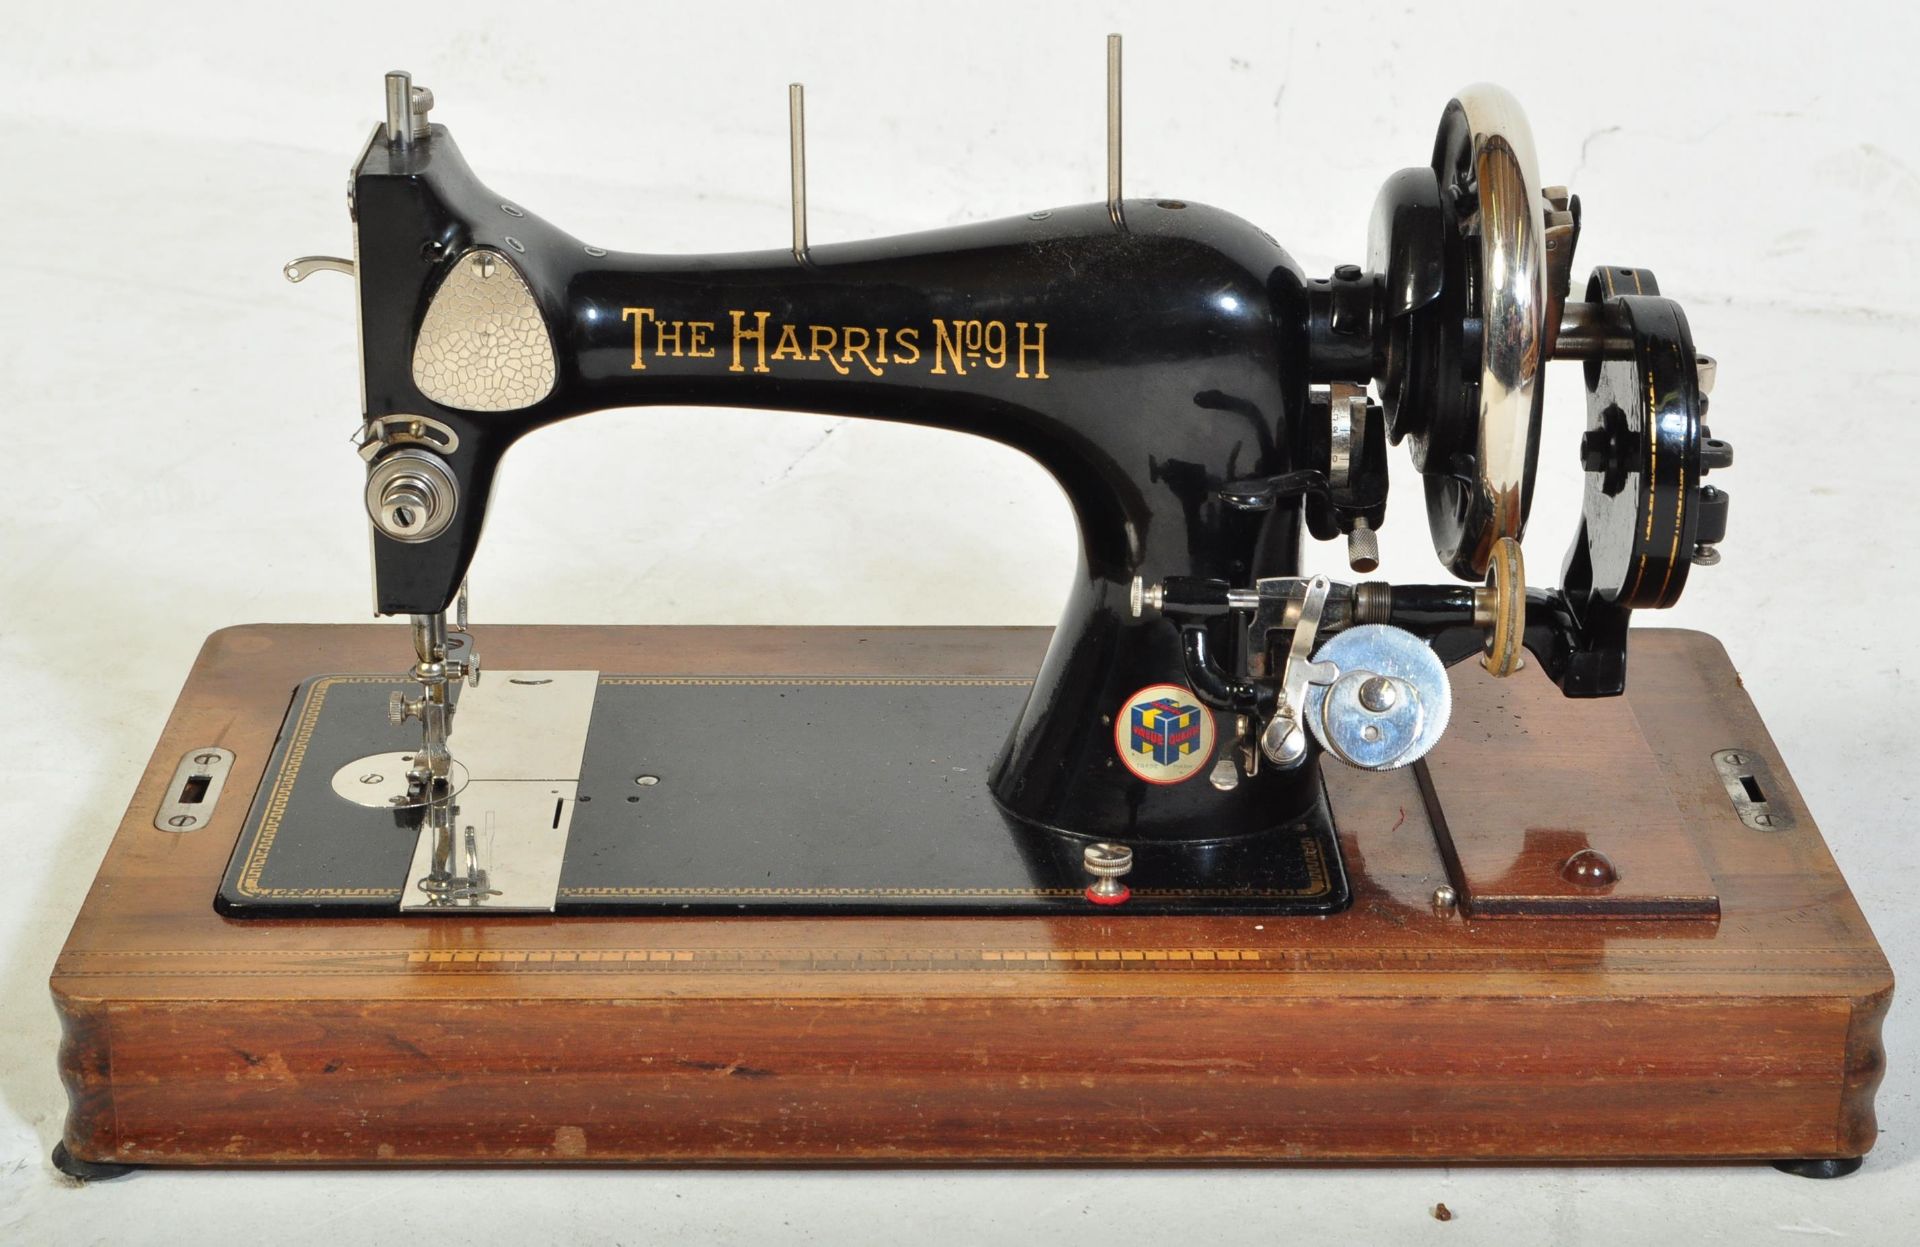 VINTAGE 'THE HARRIS N.9H' TRAVELLING SEWING MACHINE IN CASE - Image 3 of 5